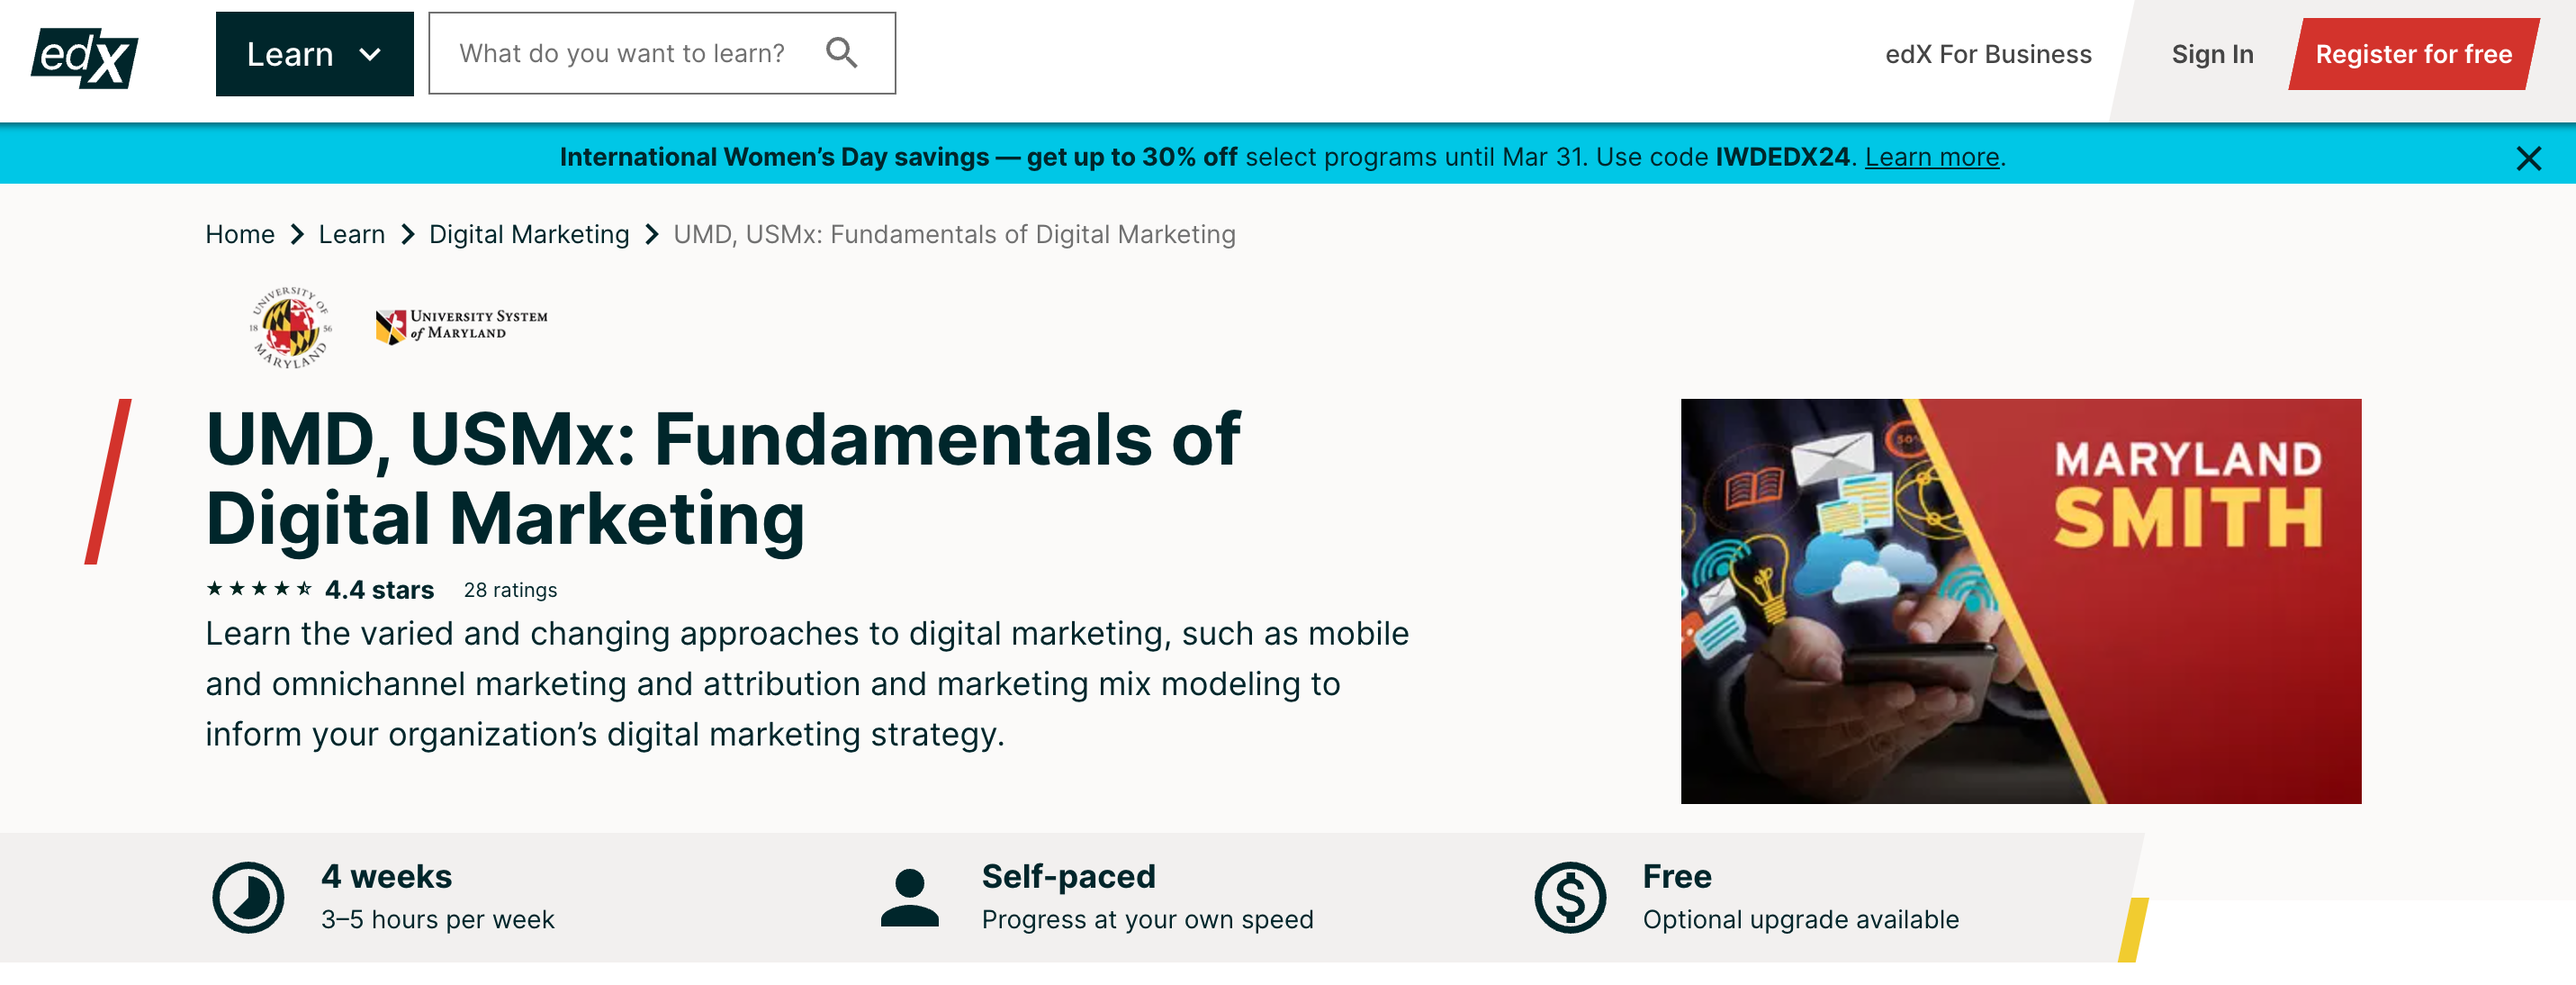 fundamentals of digital marketing course